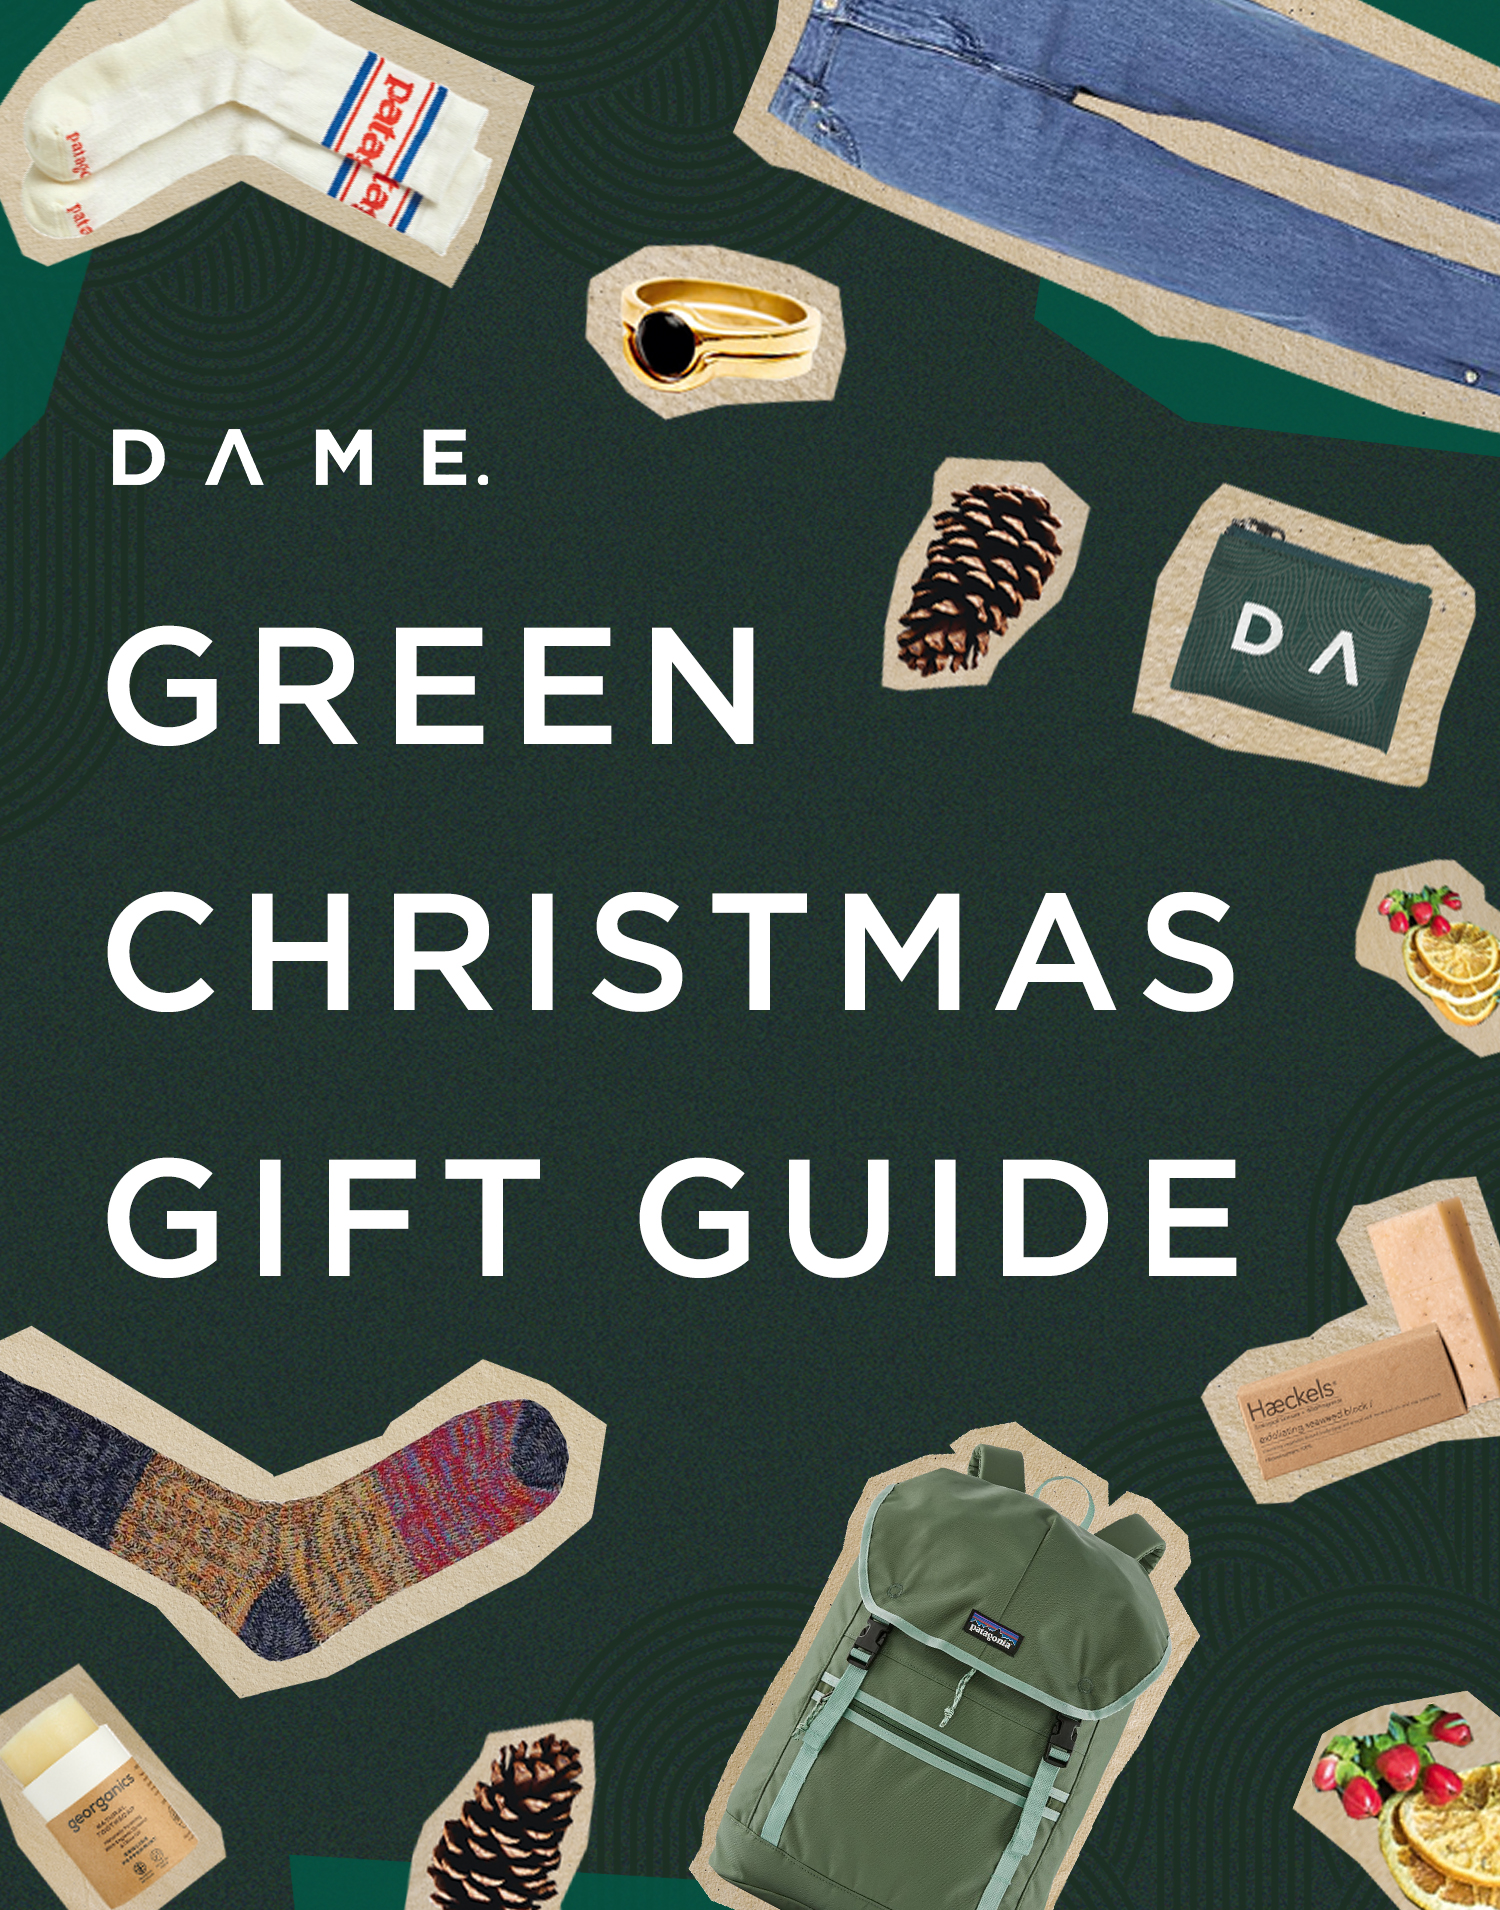 DAME Green Christmas Gift Guide